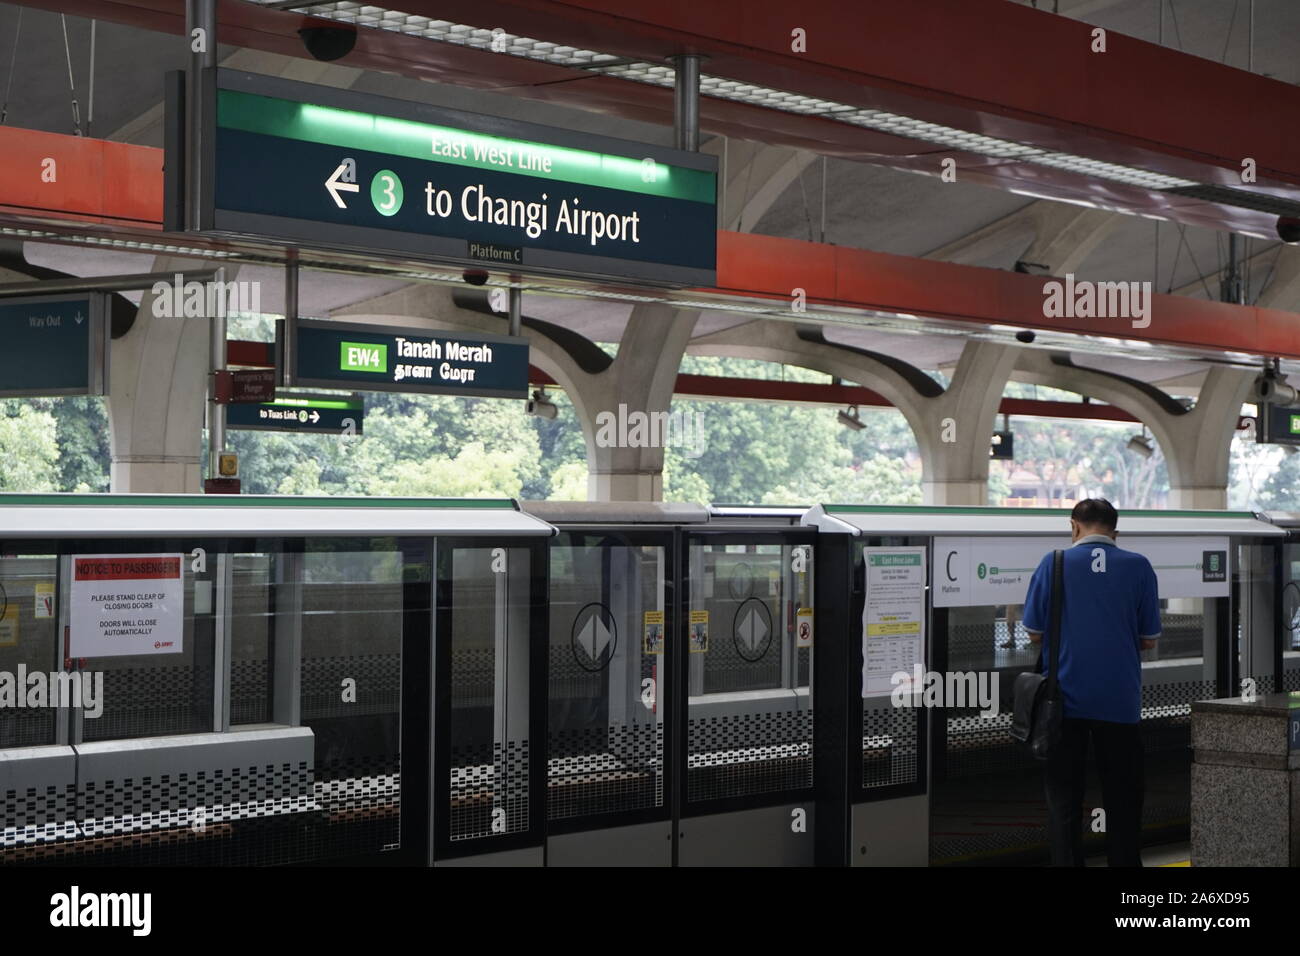 Tanah Merah estación MRT, Singapur. Señal al aeropuerto Changi. Foto de stock